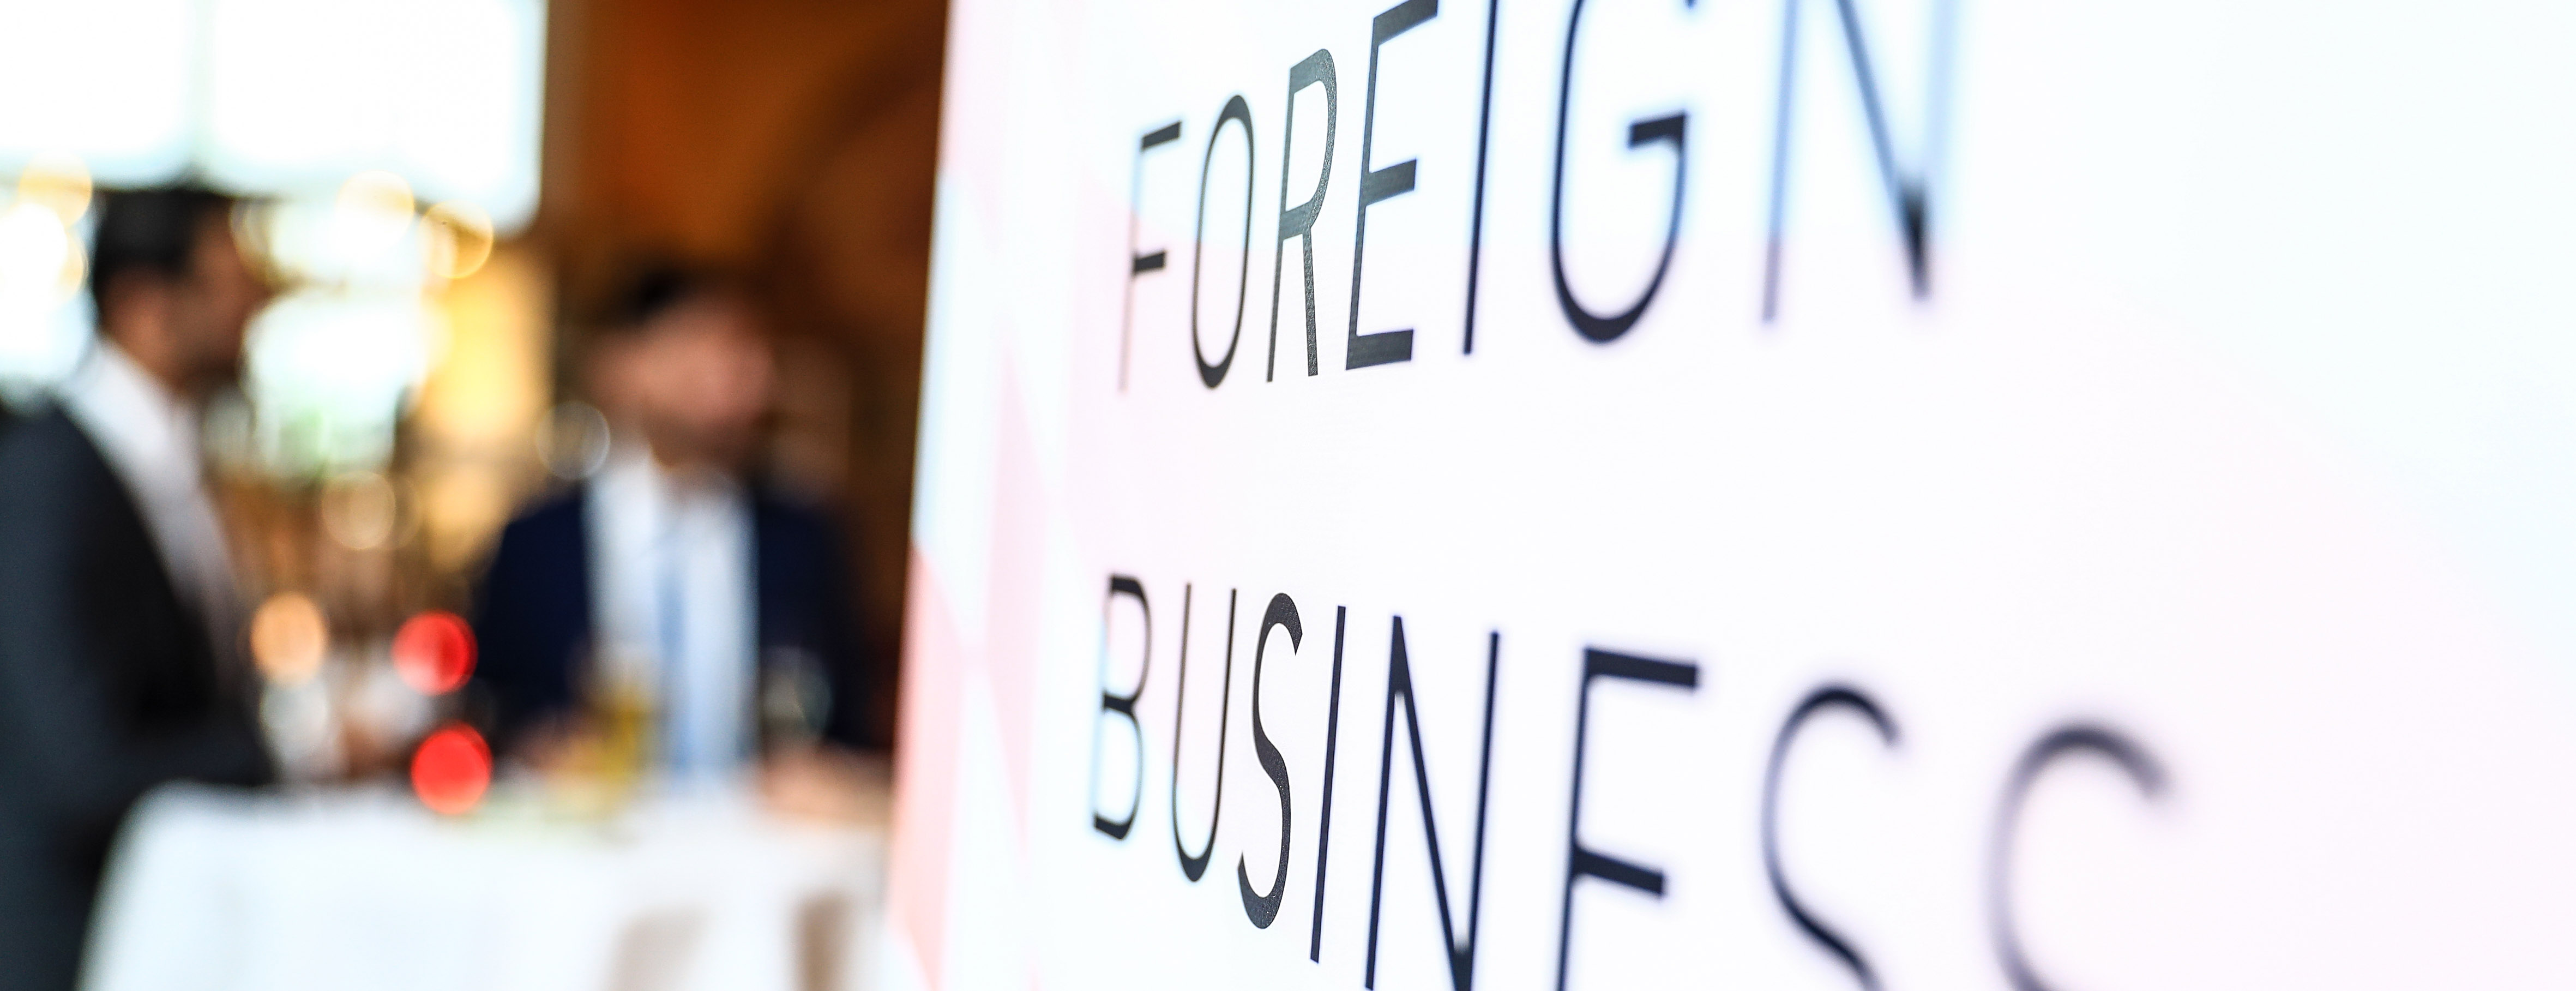 Foreign Business Club Header - Quelle: Frank Koch